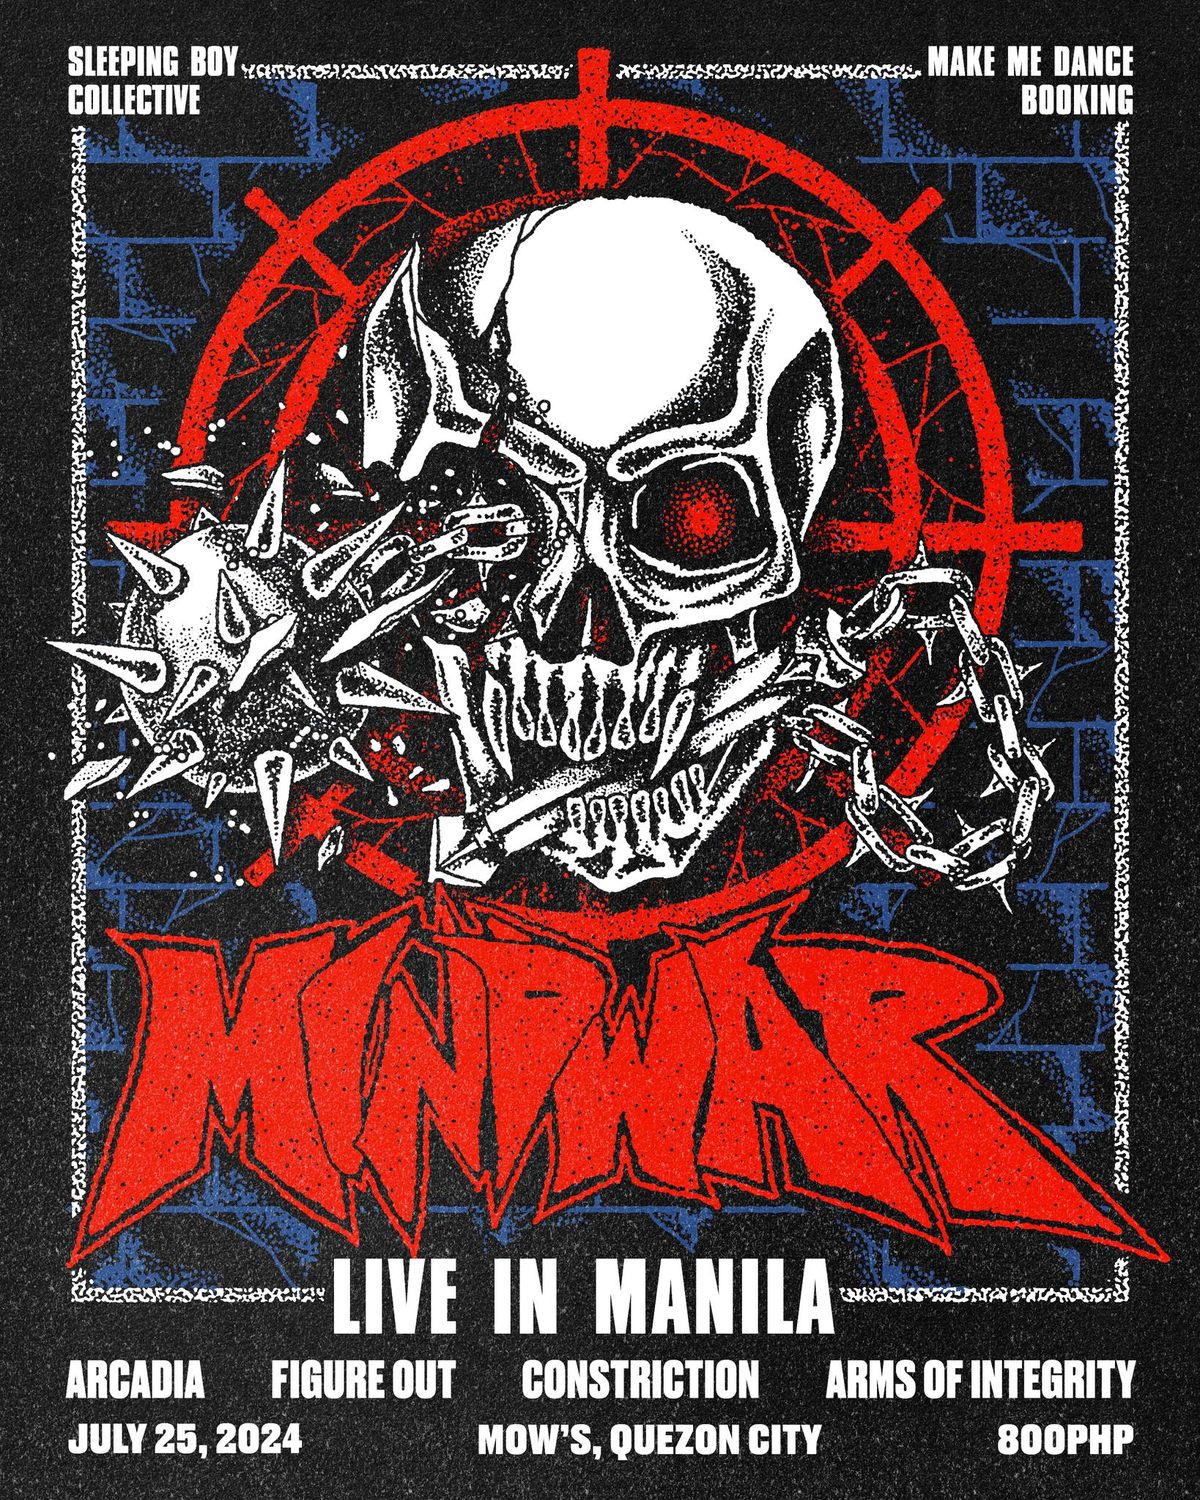 Mindwar (BE) - Live in Manila